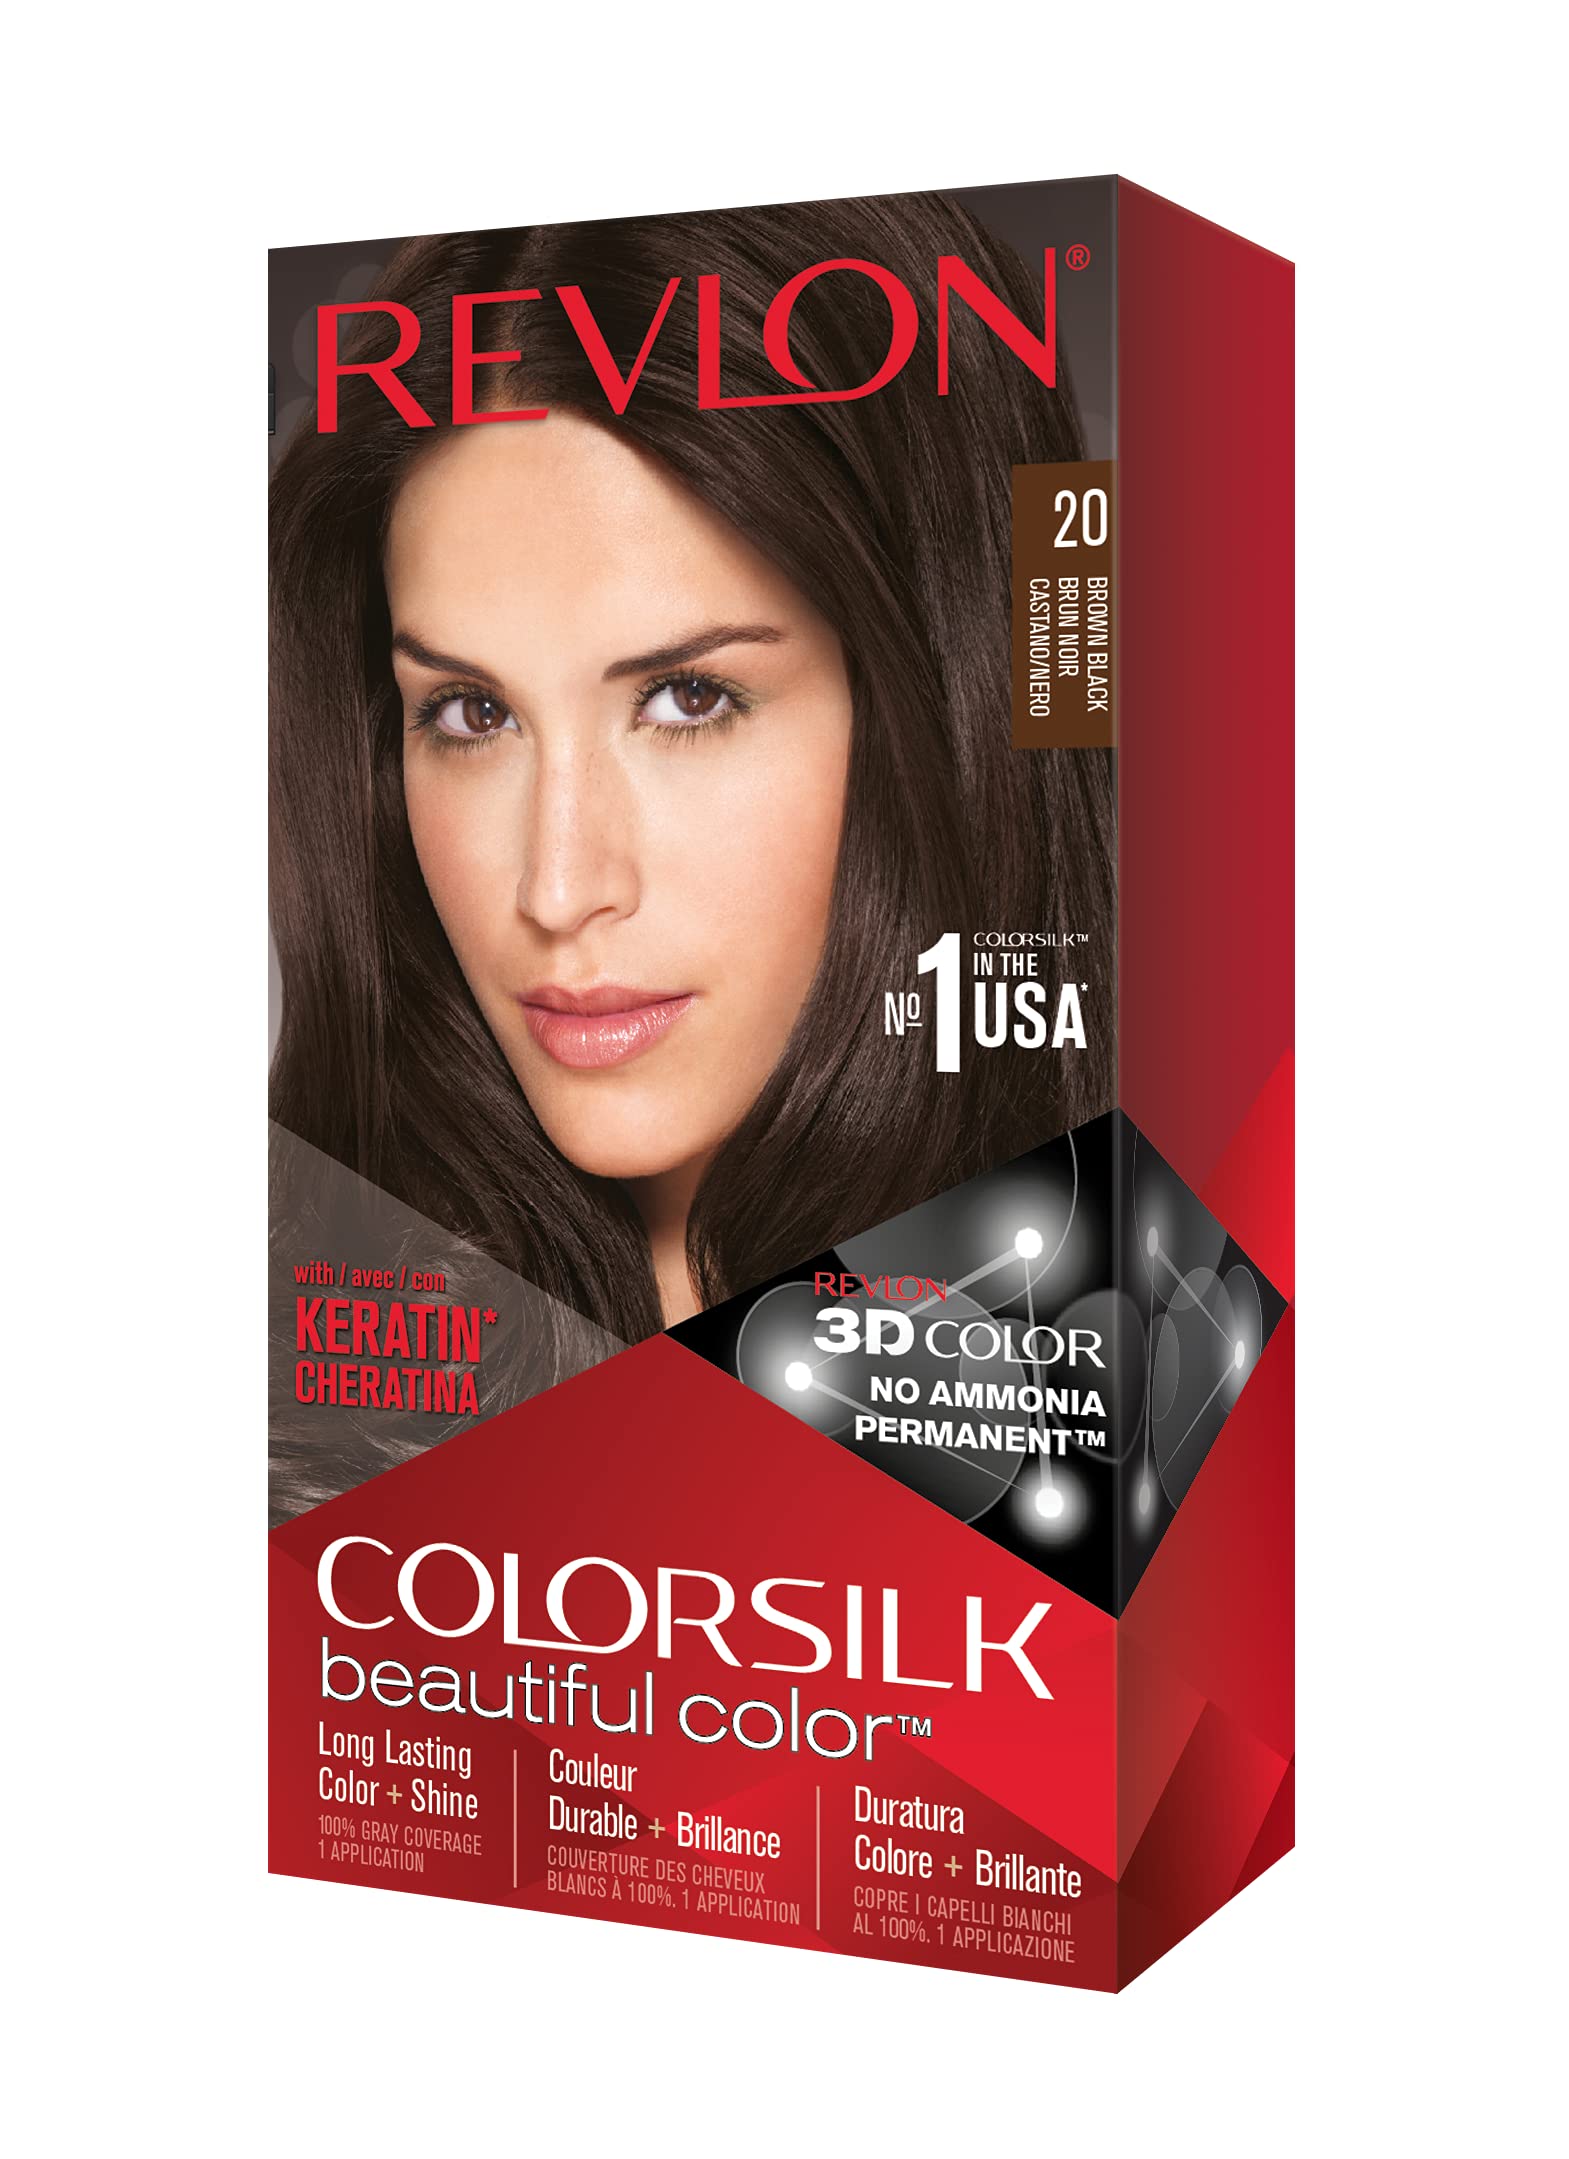 Revlon Colorsilk Hair Color 20 Brown/Black USA - 1ct/3PK